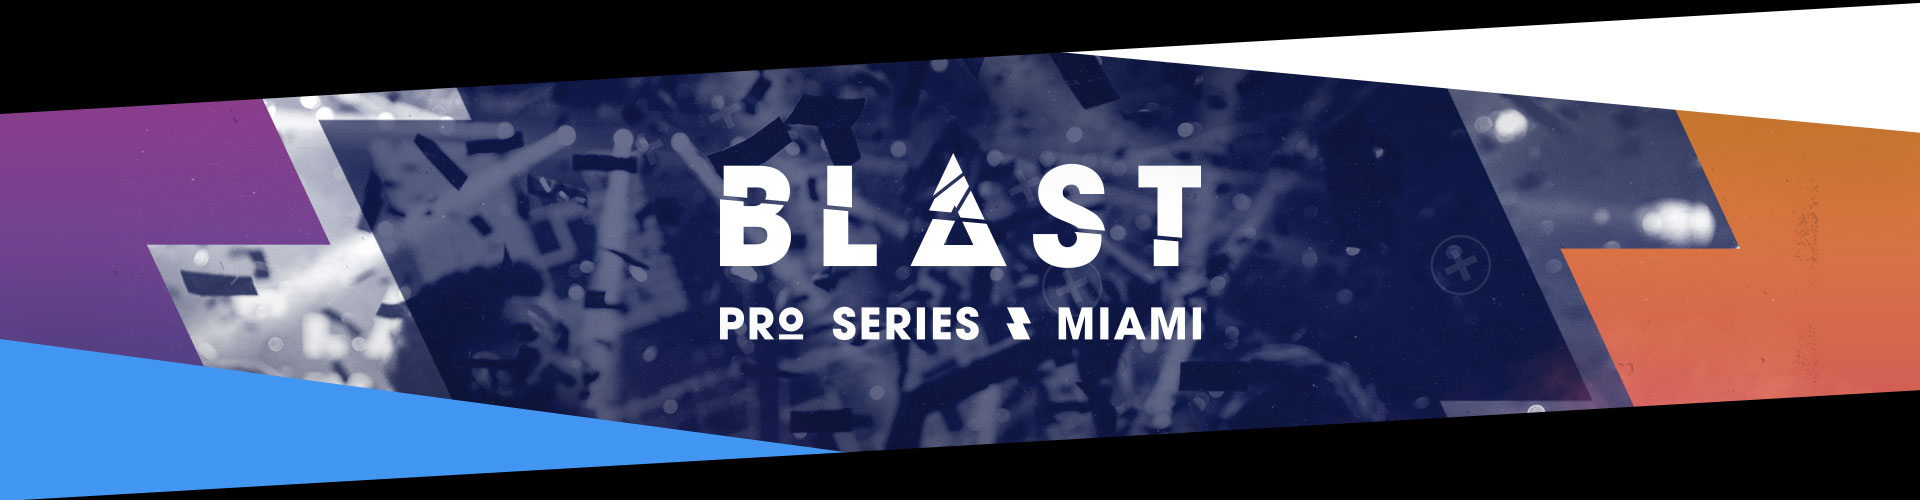 Counter-Strike: Global Offensive - BLAST Pro Series Miami